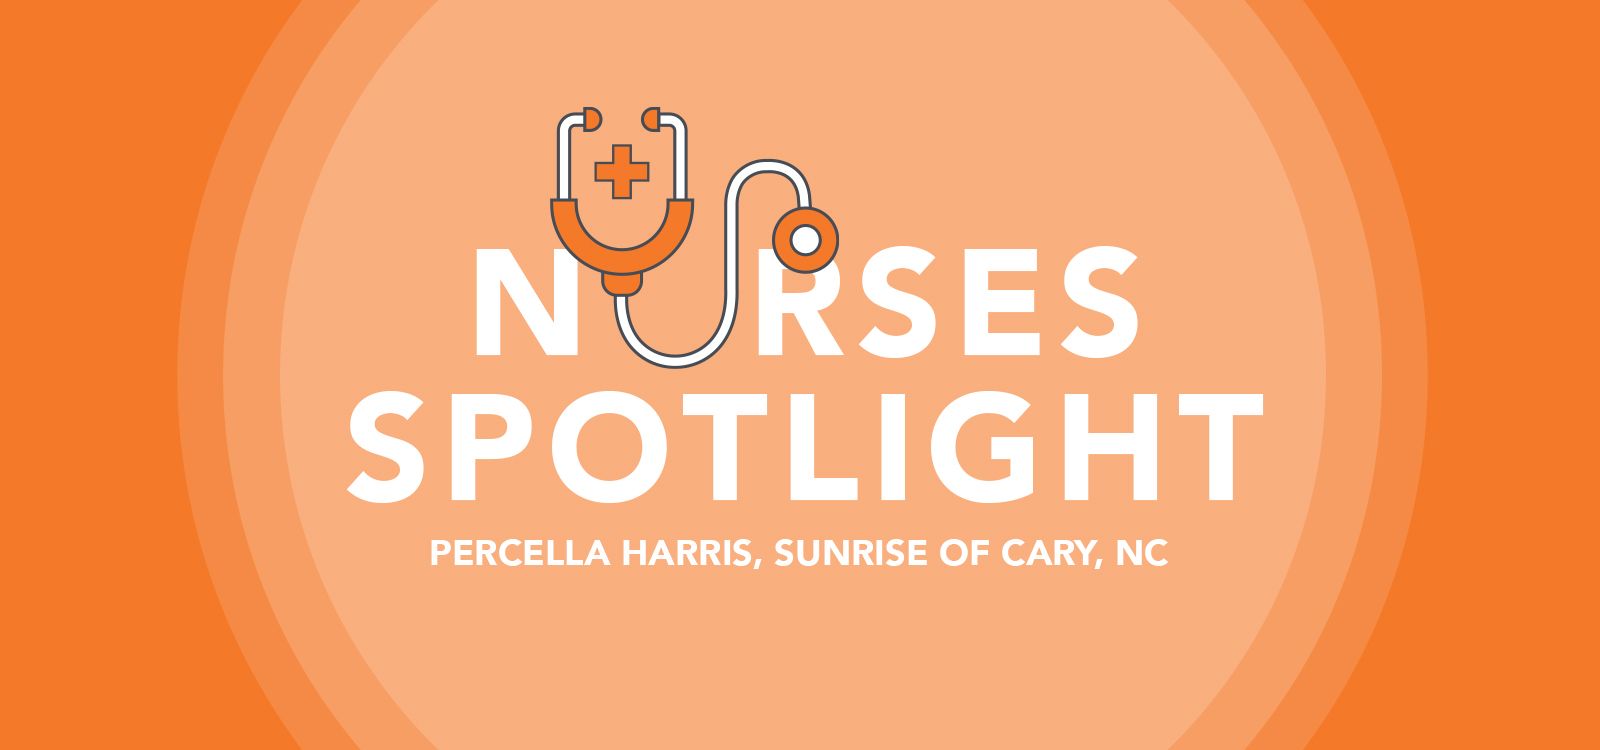 Nurses Spotlight Percella Harris